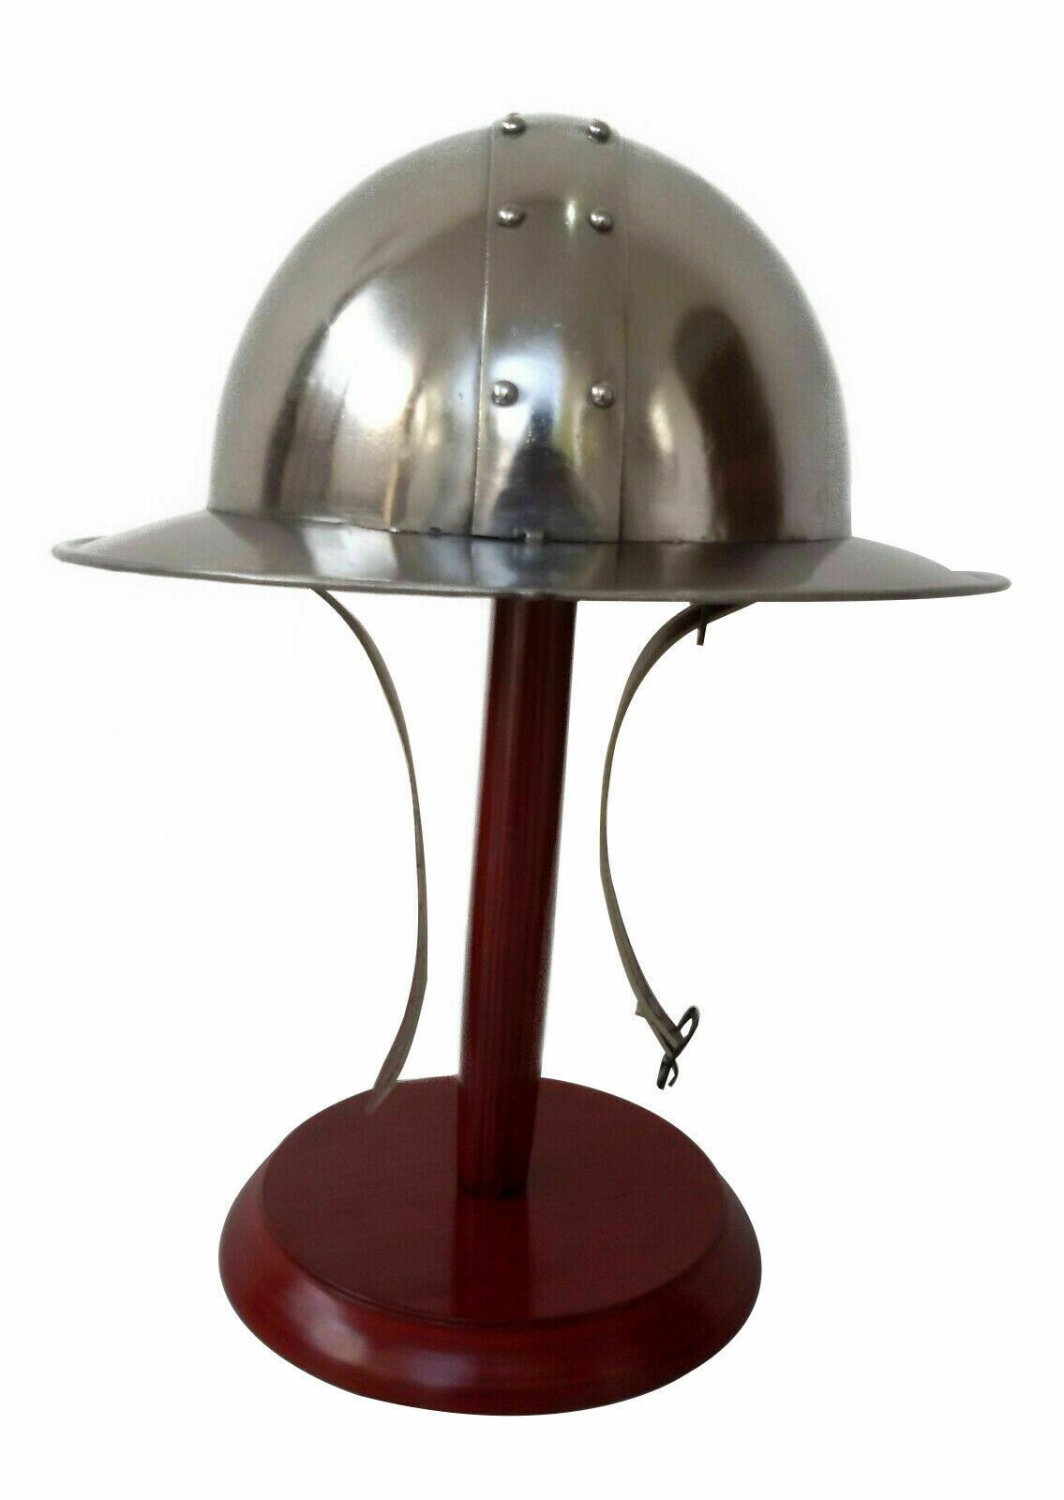 Halloween Medieval reenactment kettle hat helmet larp role play infantry spanish 